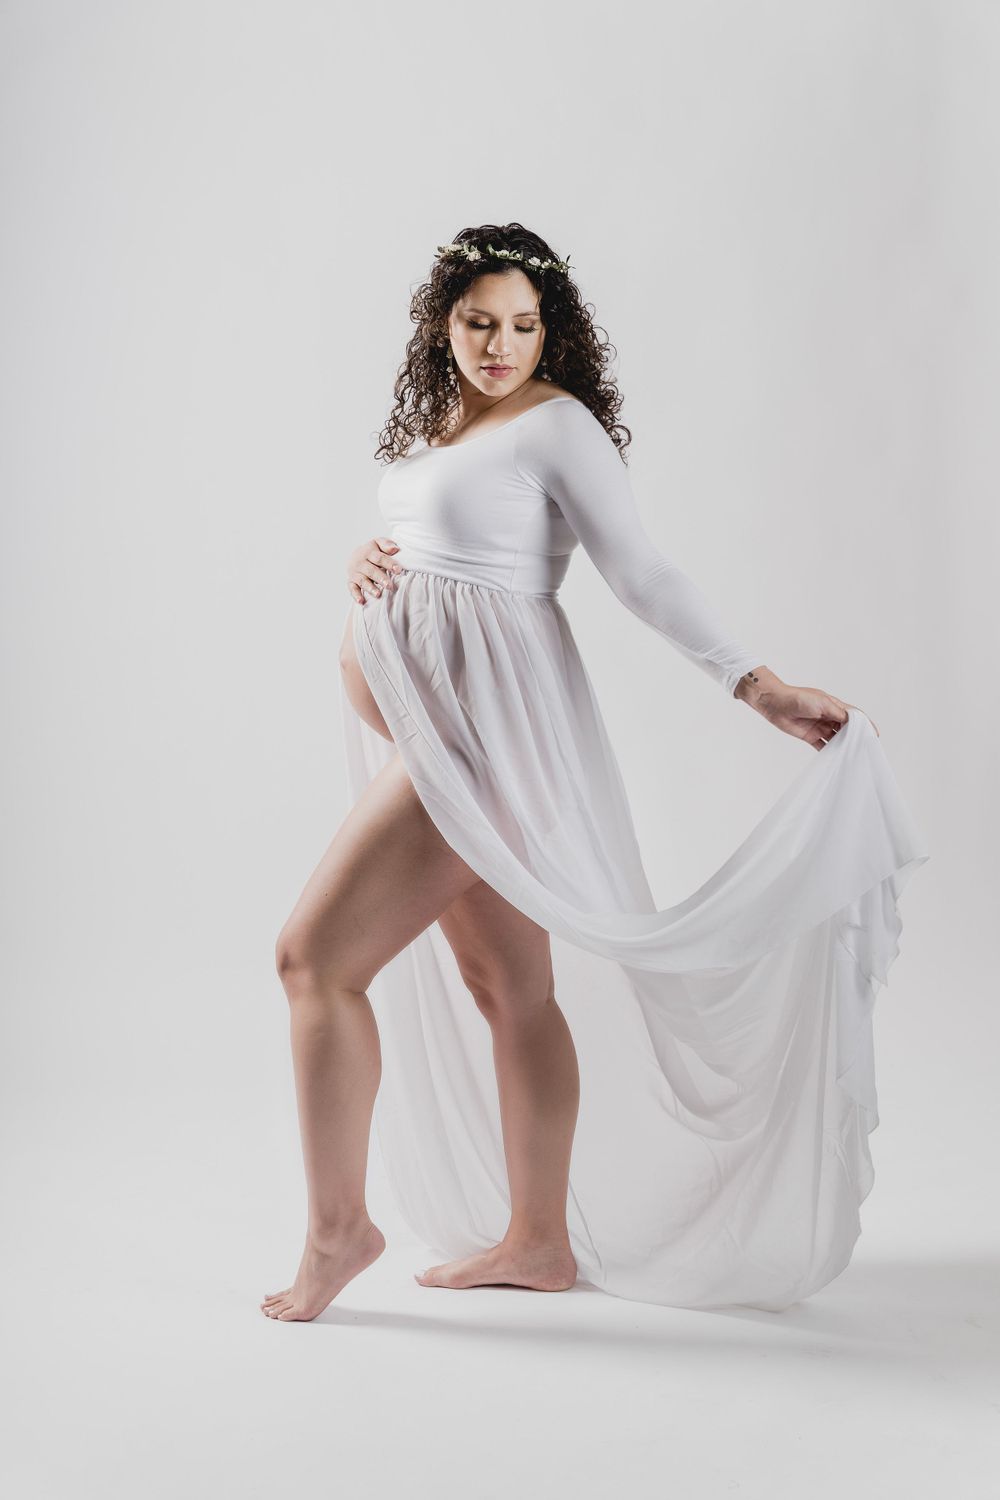 Maternity photography, Jacksonville FL, Carolennys Studios, Fine Art Maternity Photography, Studio Photography, White sleeve maternity dress